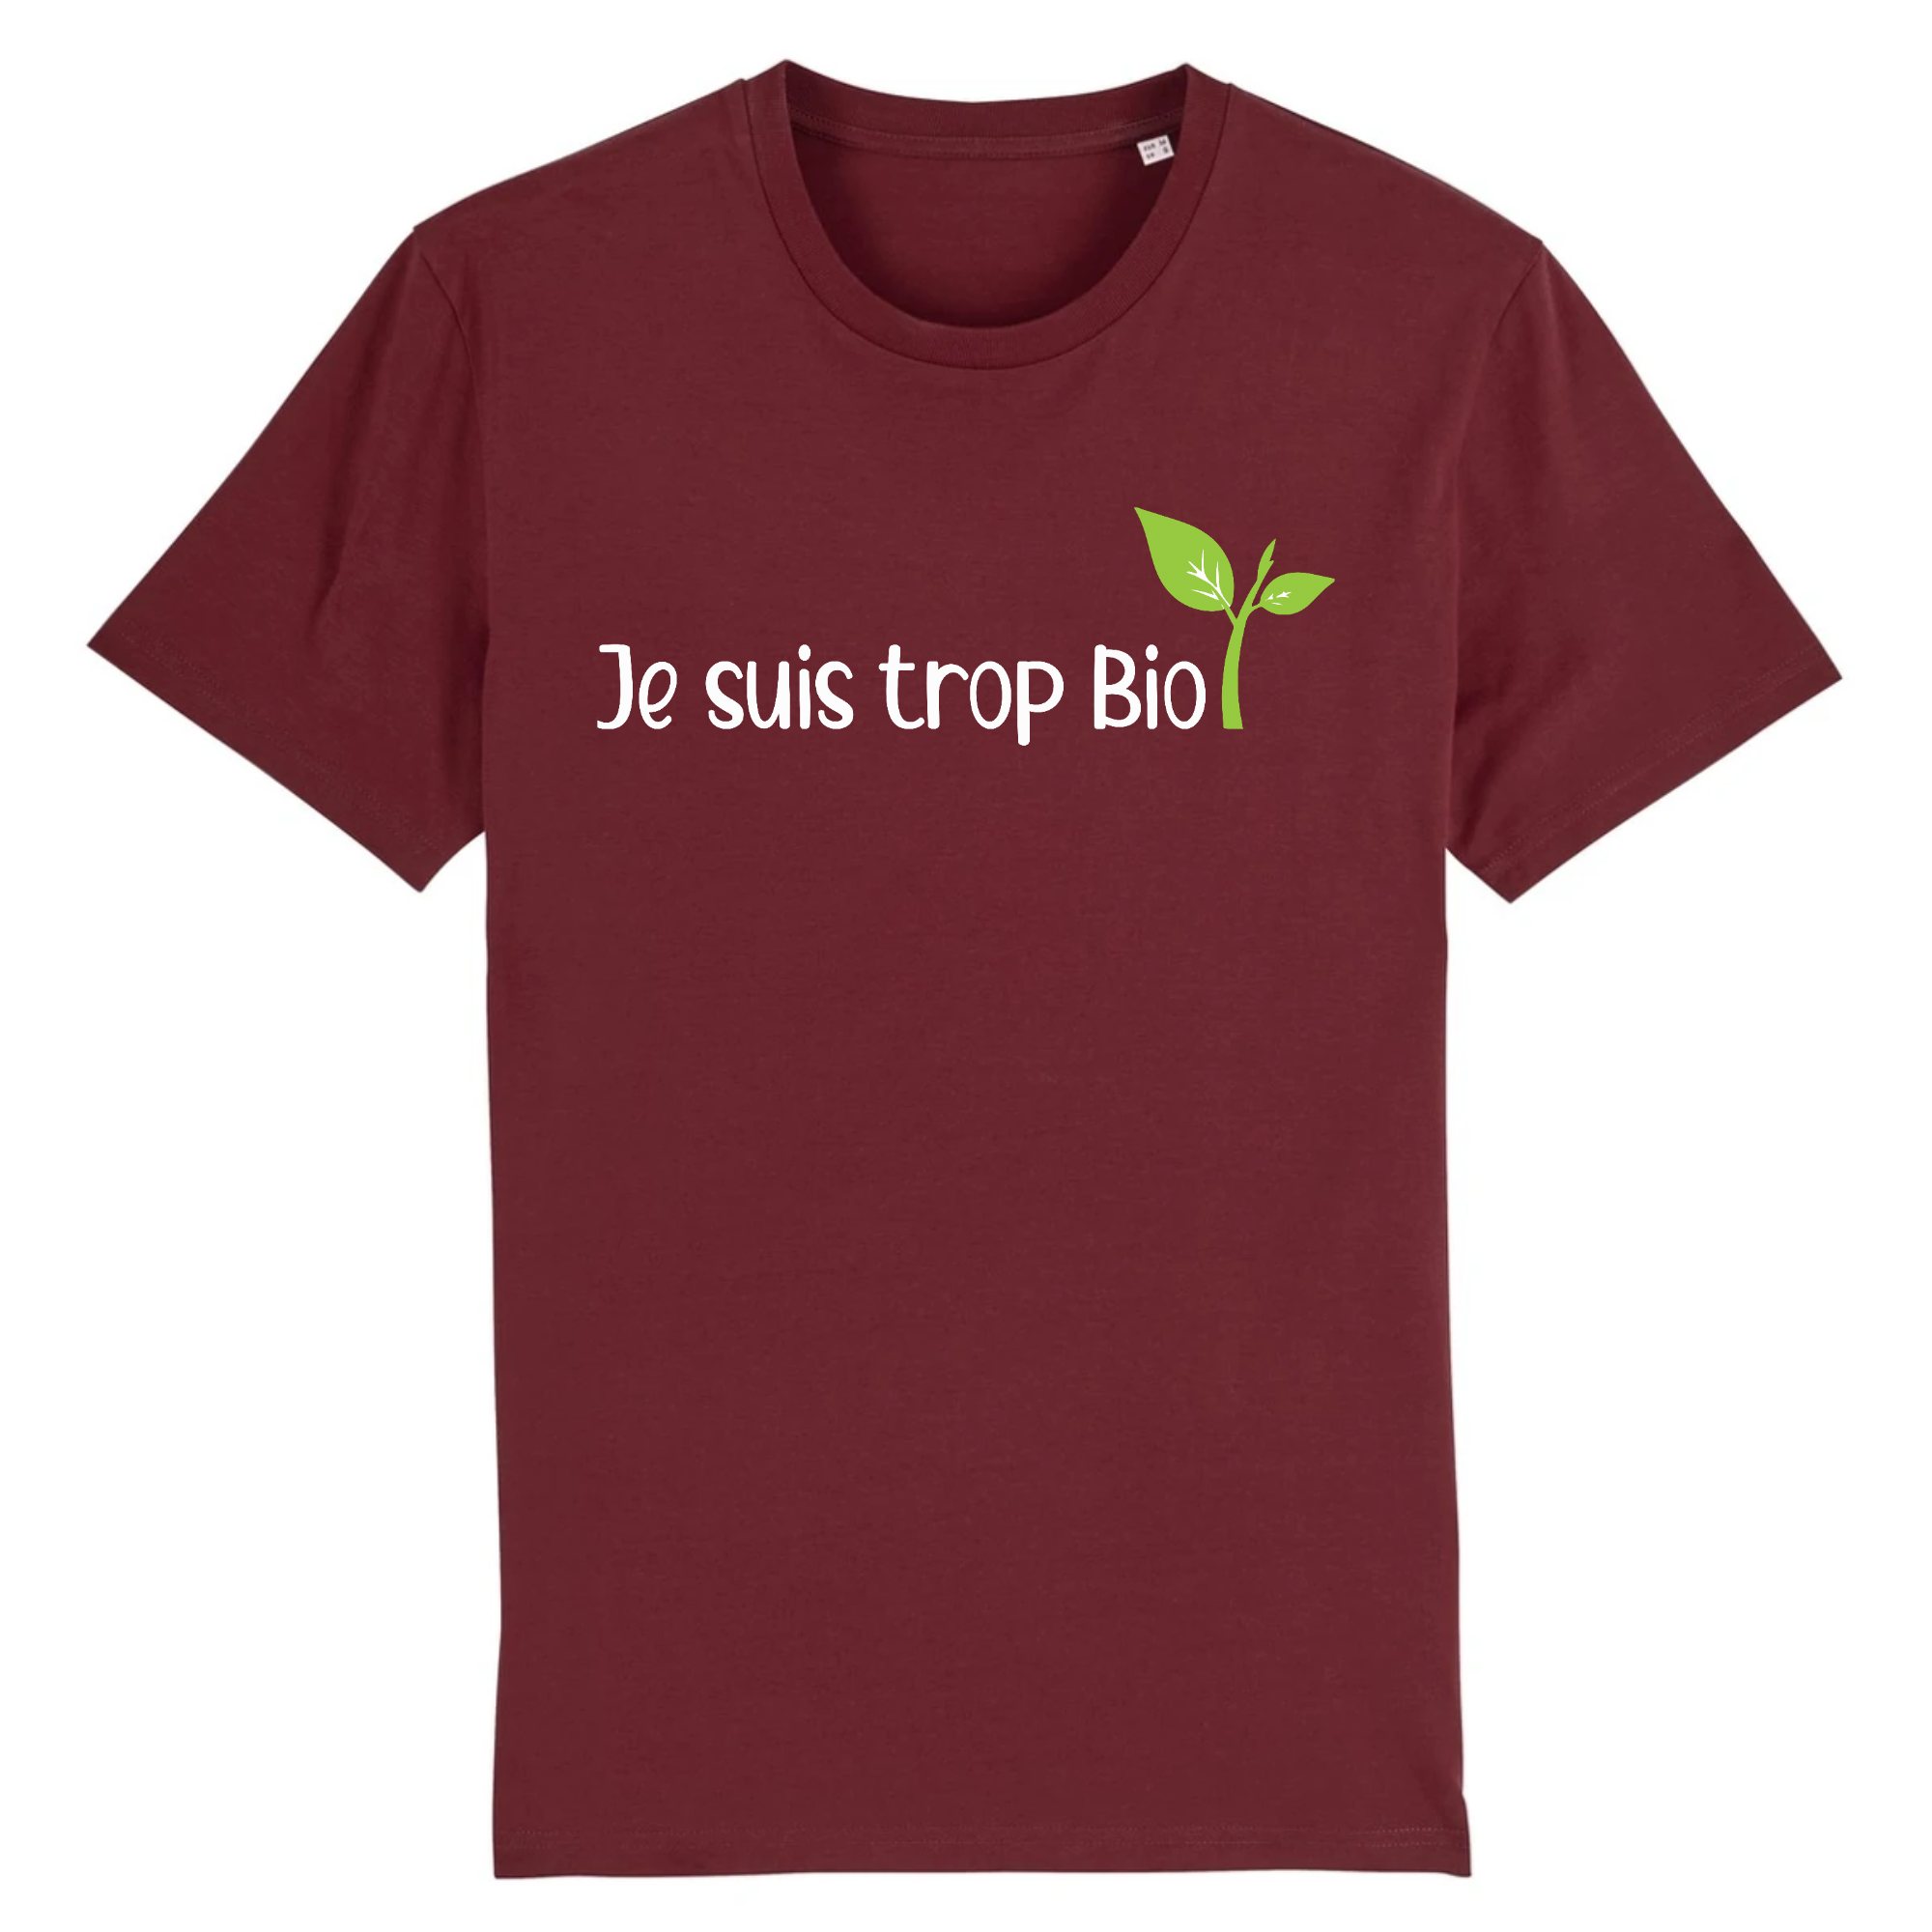 Trop BIO // Tshirt UNISEX